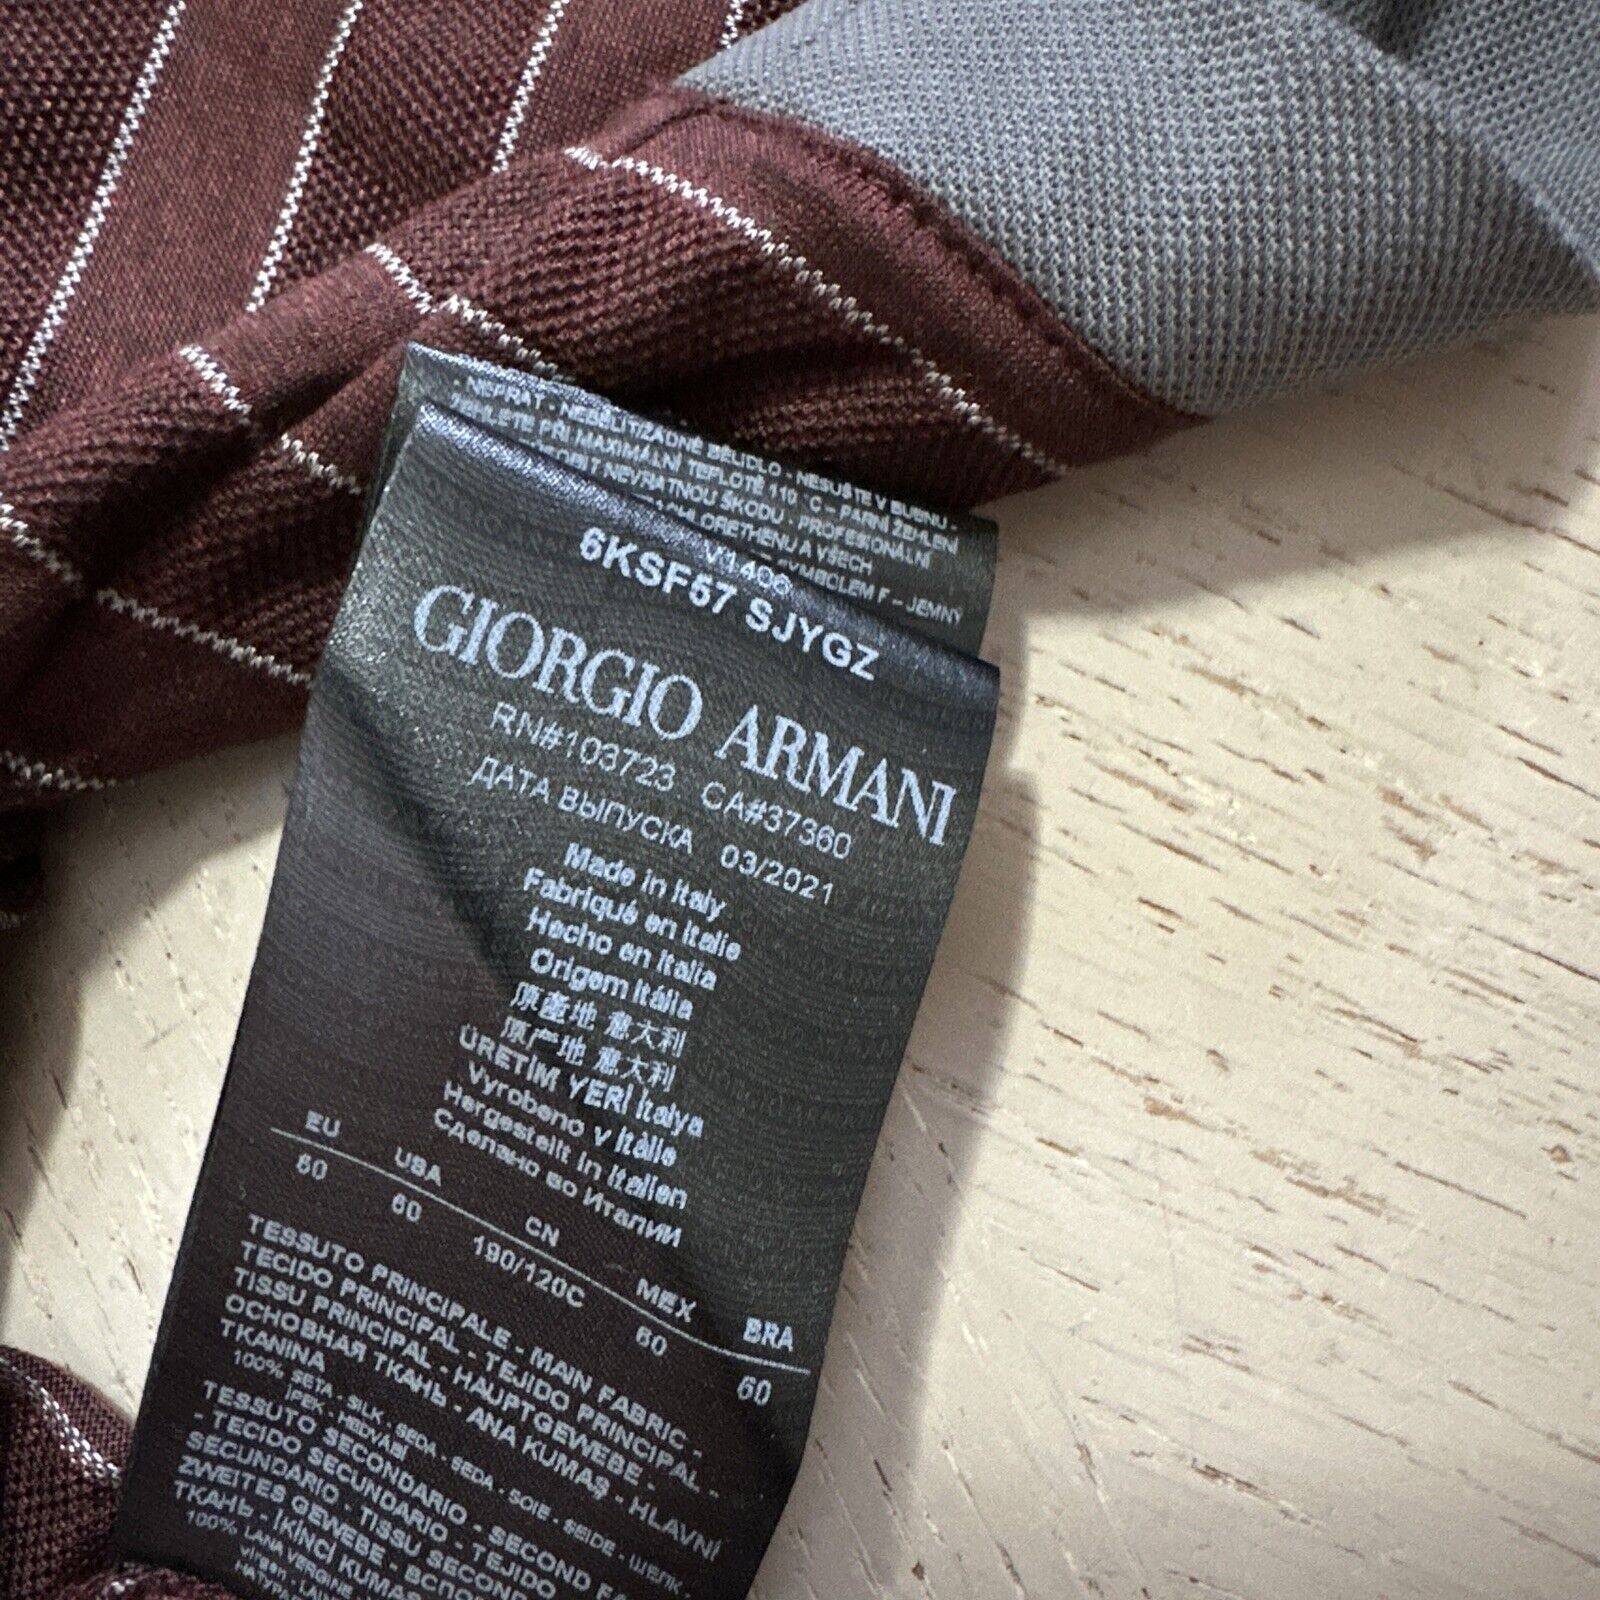 NWT $1025 Мужская шелковая футболка Giorgio Armani бордовая 50 США/60 ЕС (XXL) Италия